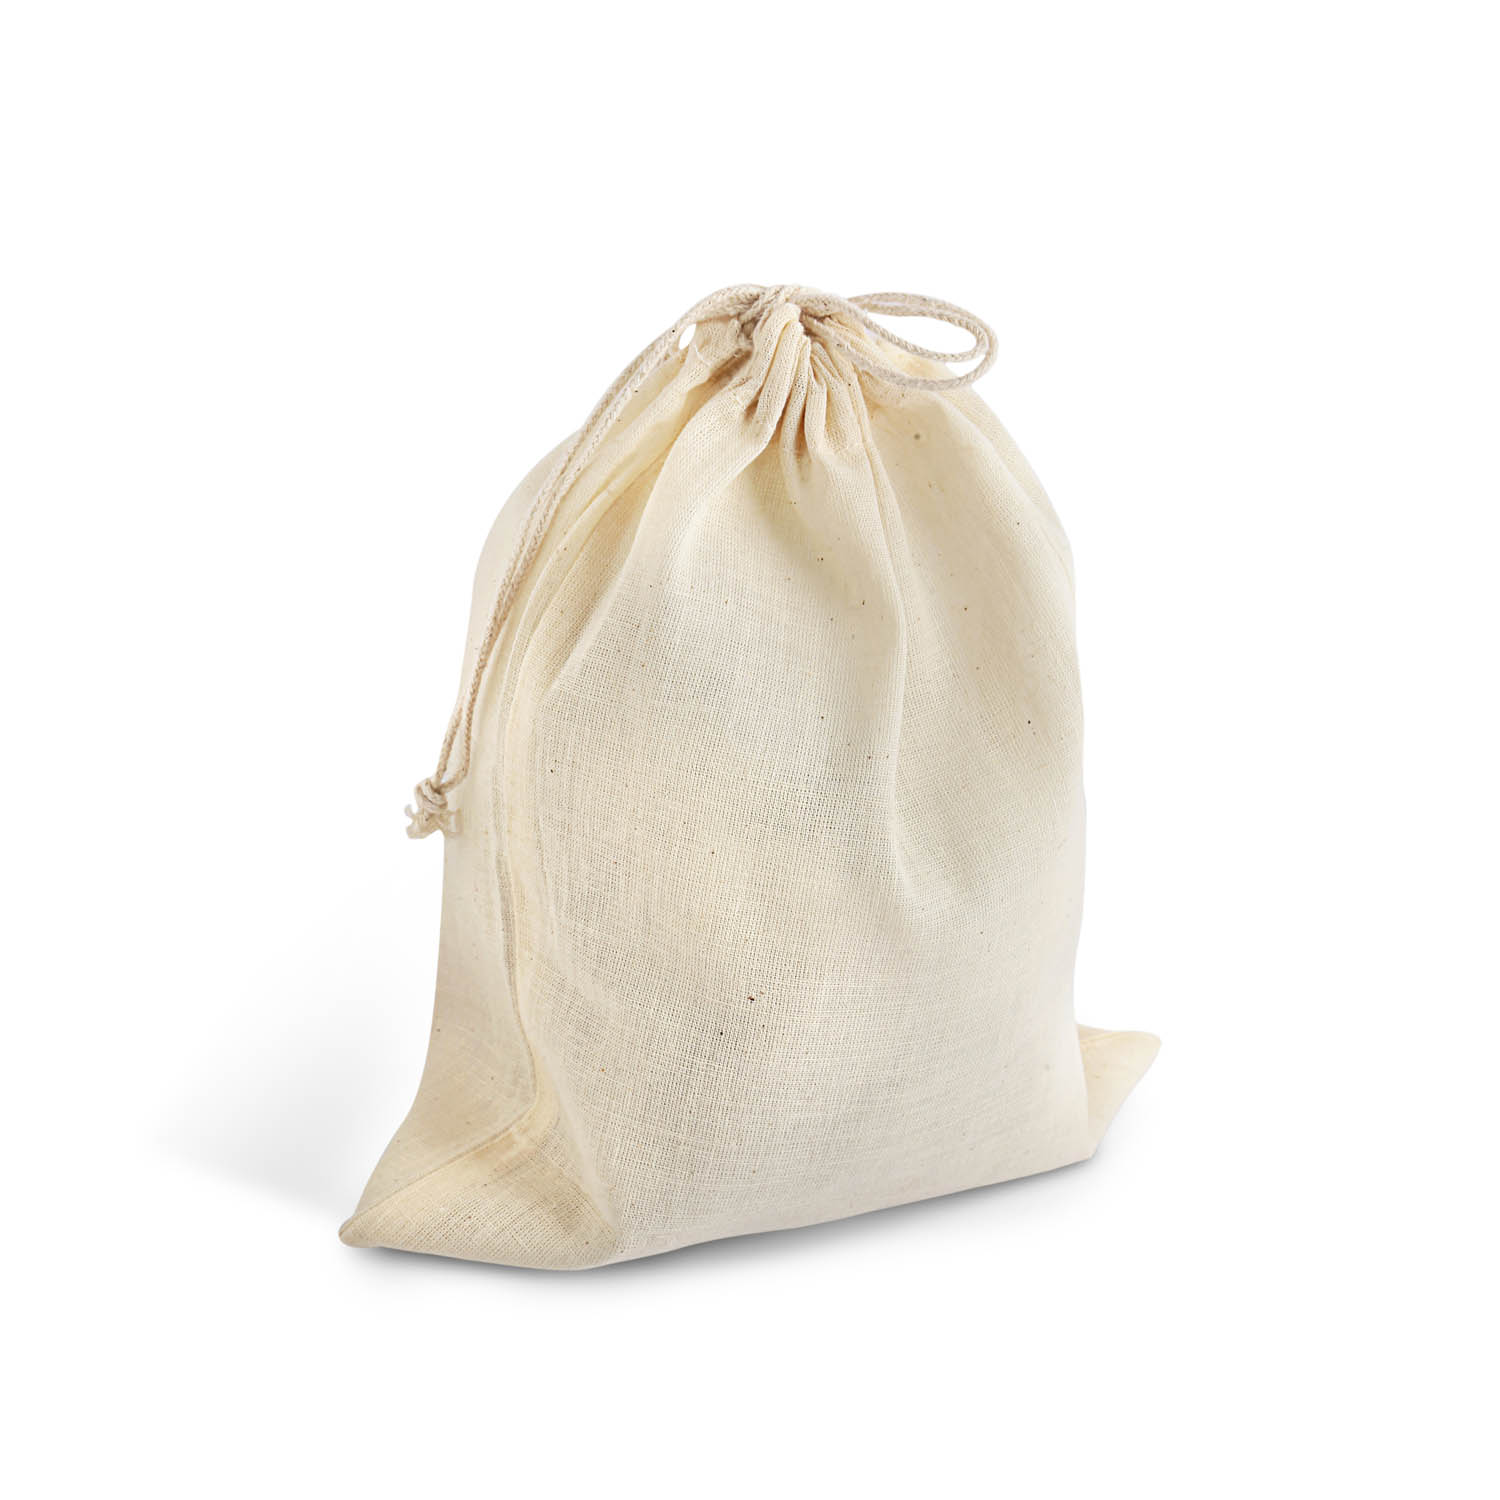 L'Occitane Verbena Large Duffel Cotton Bag With Towel for sale online | eBay